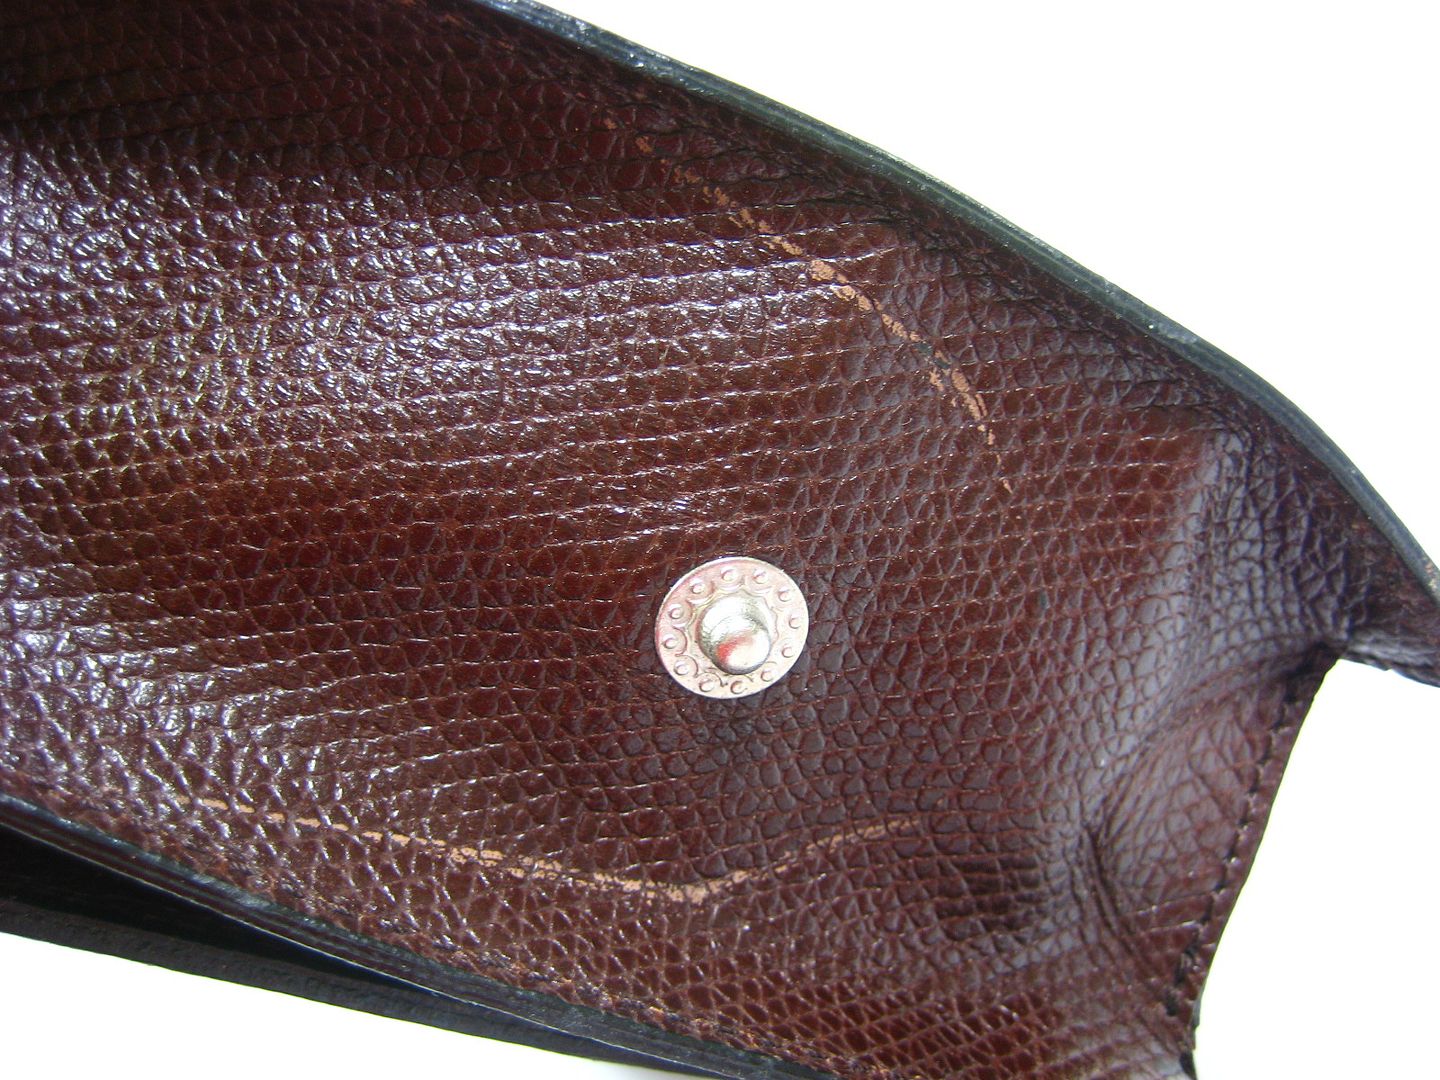 Vintage YSL Yves Saint Laurent Chocolate Brown Leather Clutch Bag ...  